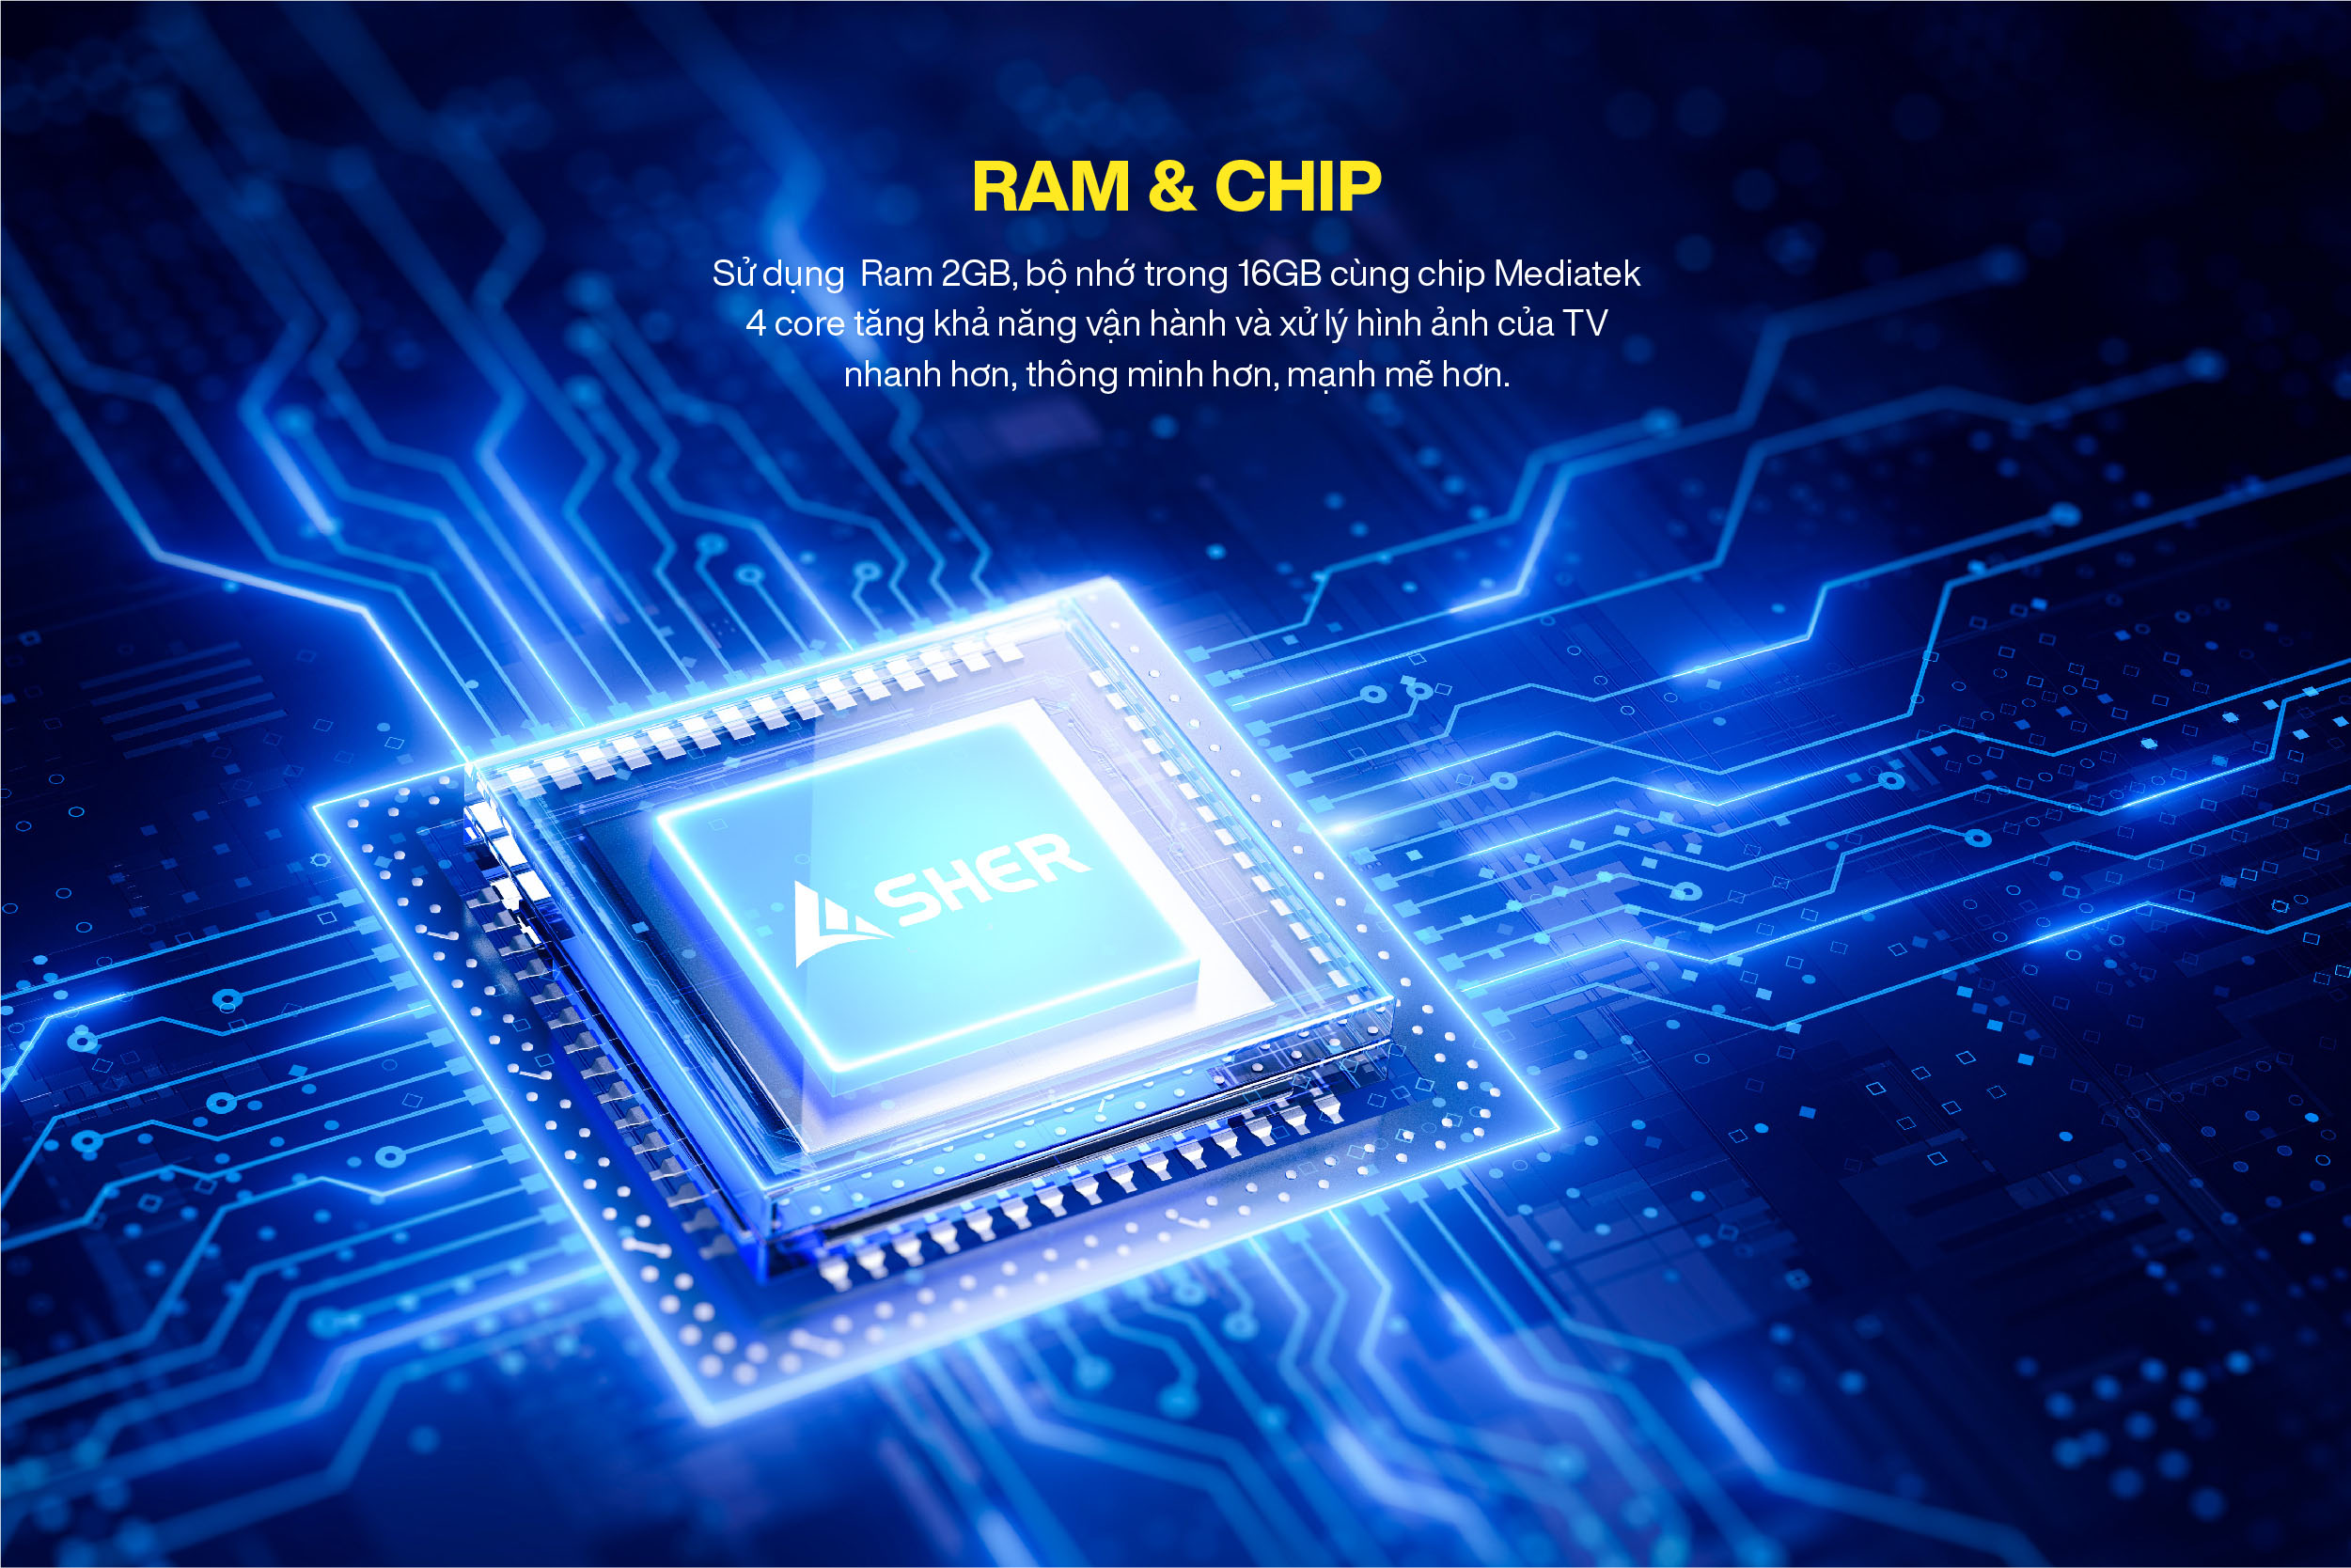 Ram & Chip tivi A-32GH6600